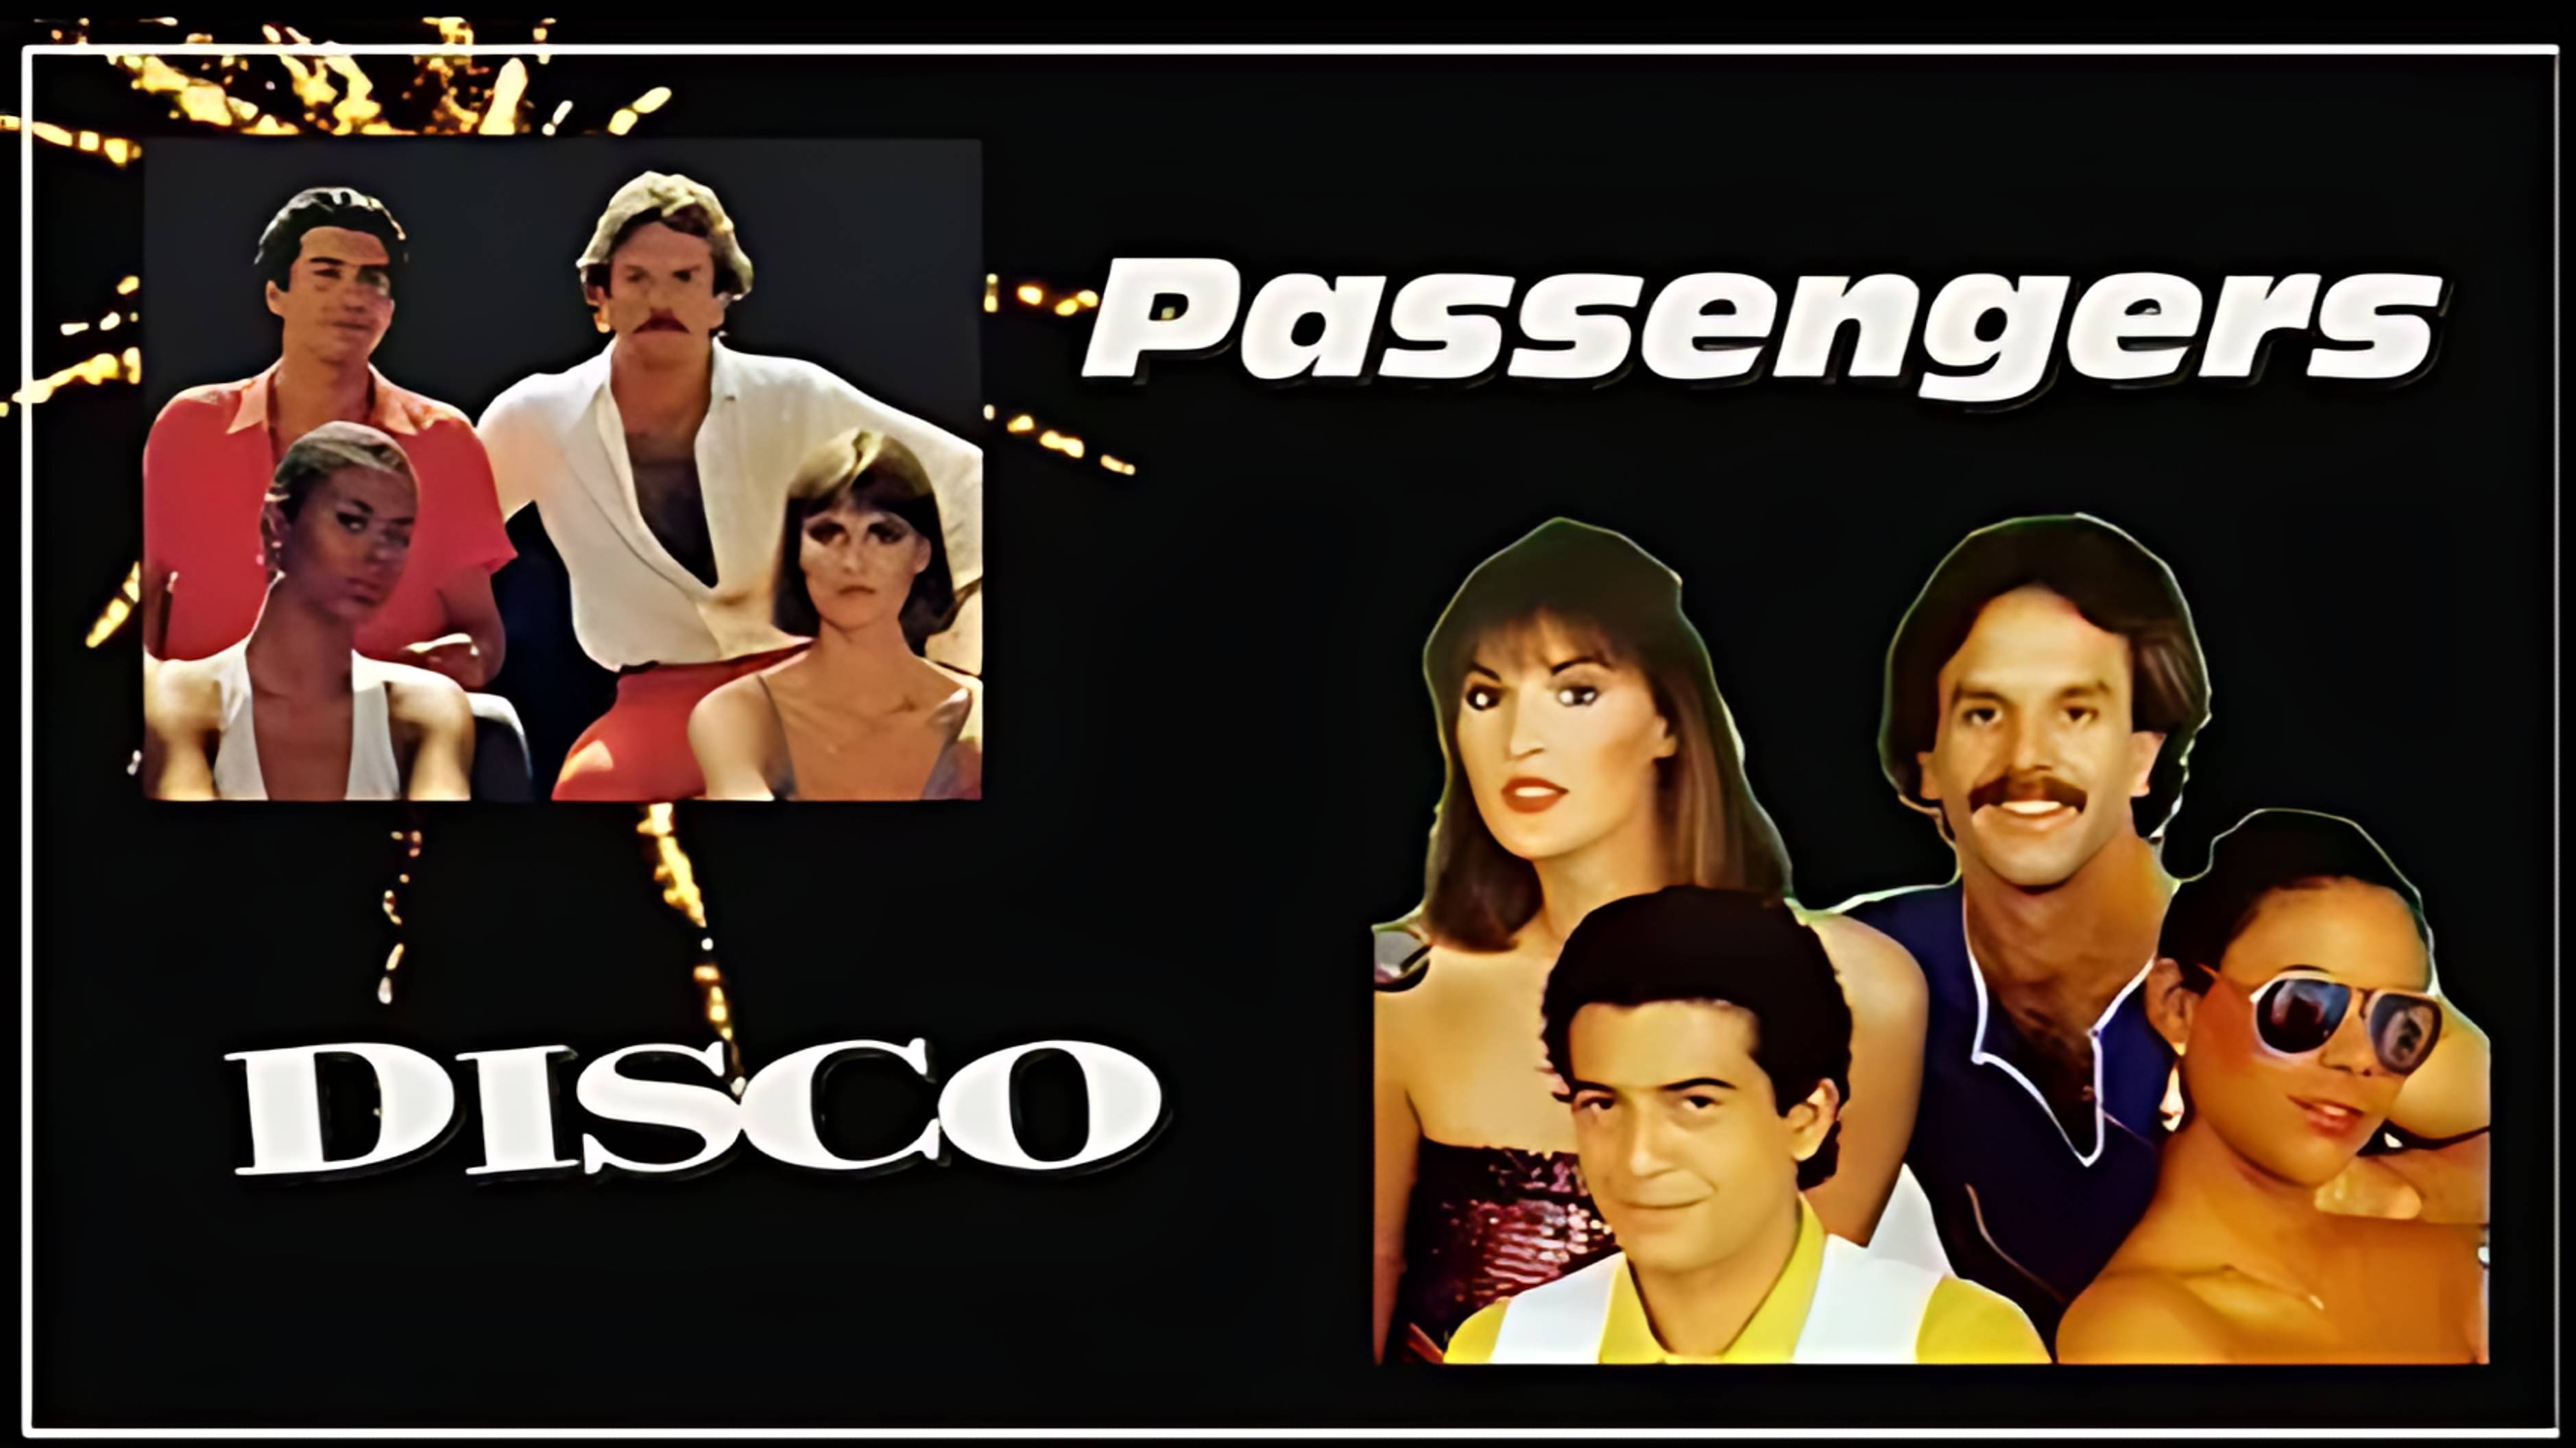 Passengers - Casino (Discoring 1981) Full HD (1080p, FHD)